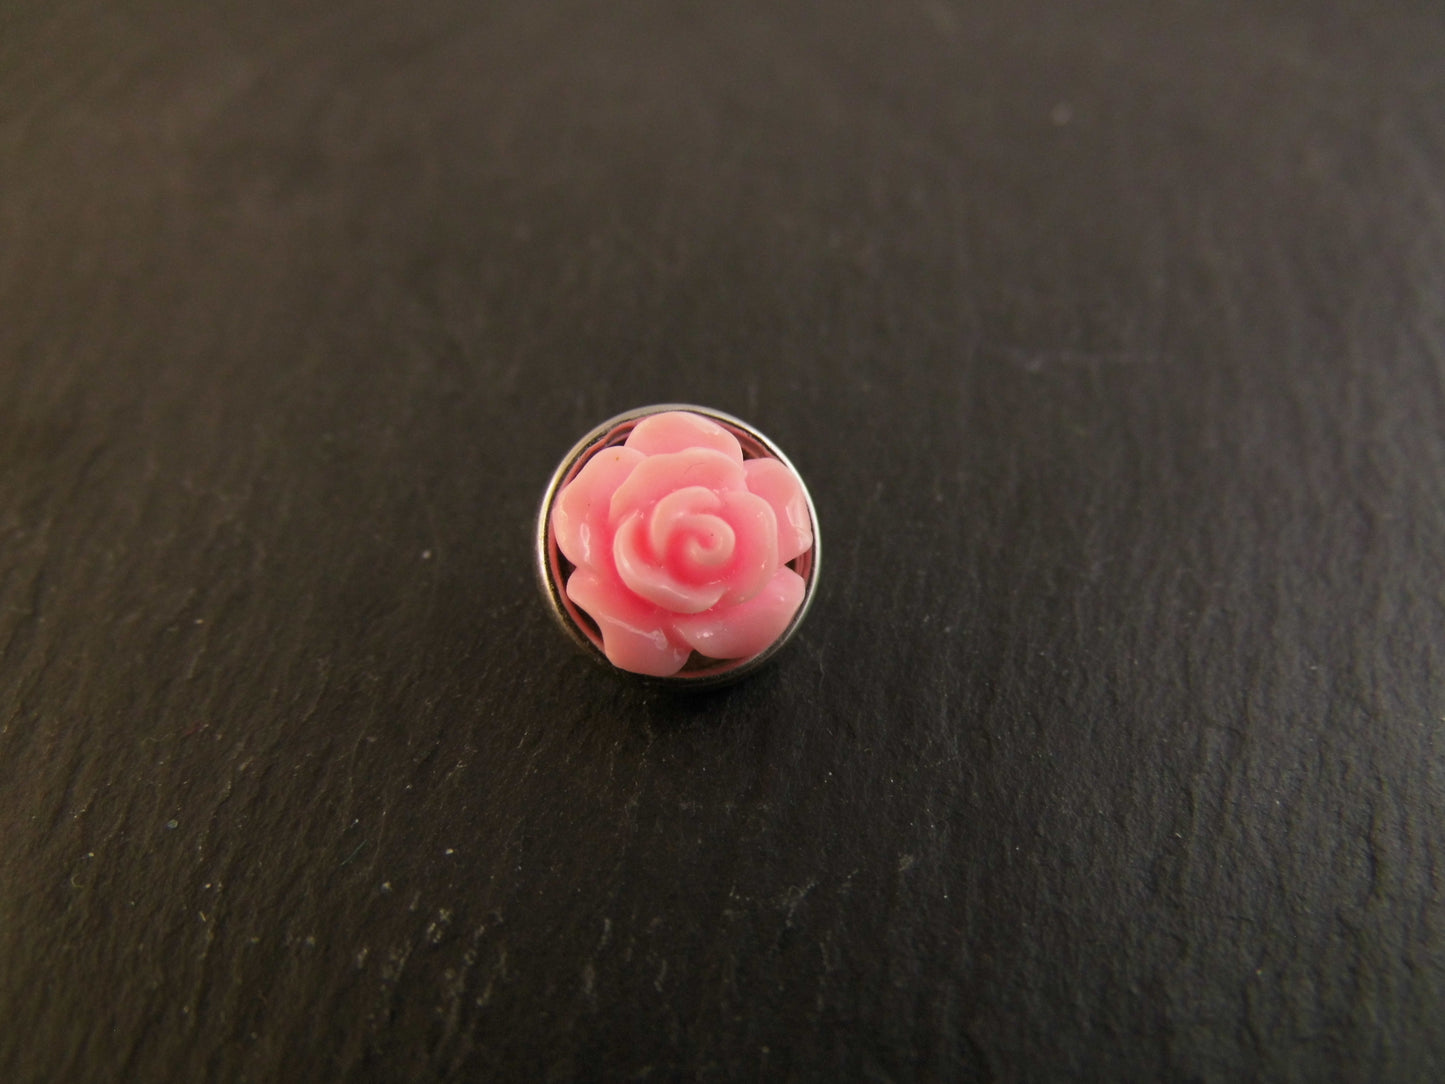 Mini Click Button Rose verschiedene Farben